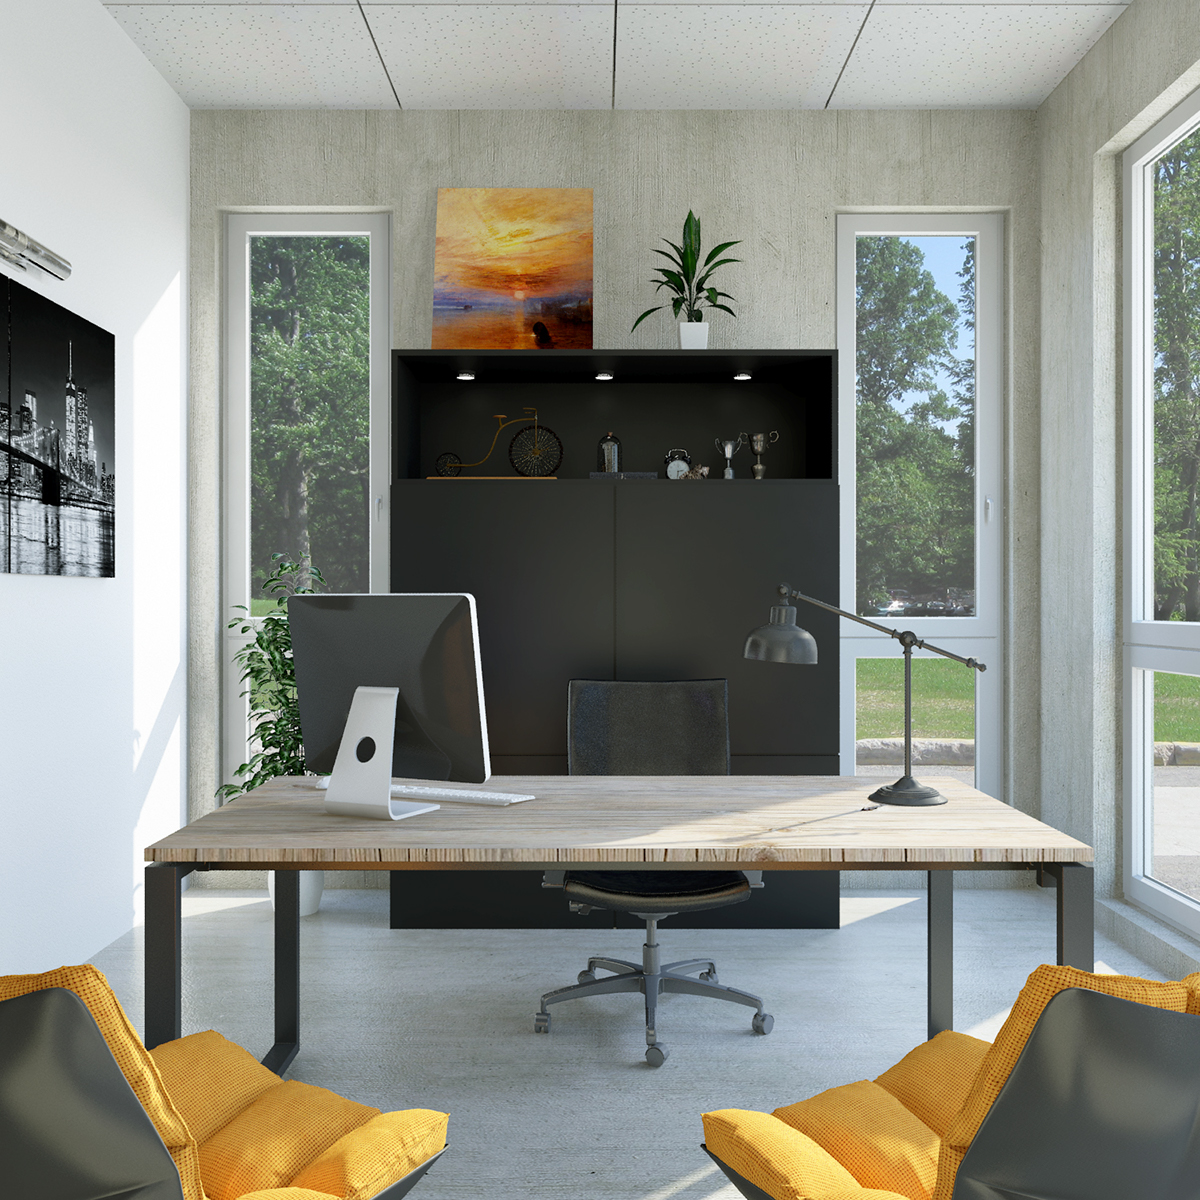 Office space interior design on Behance
